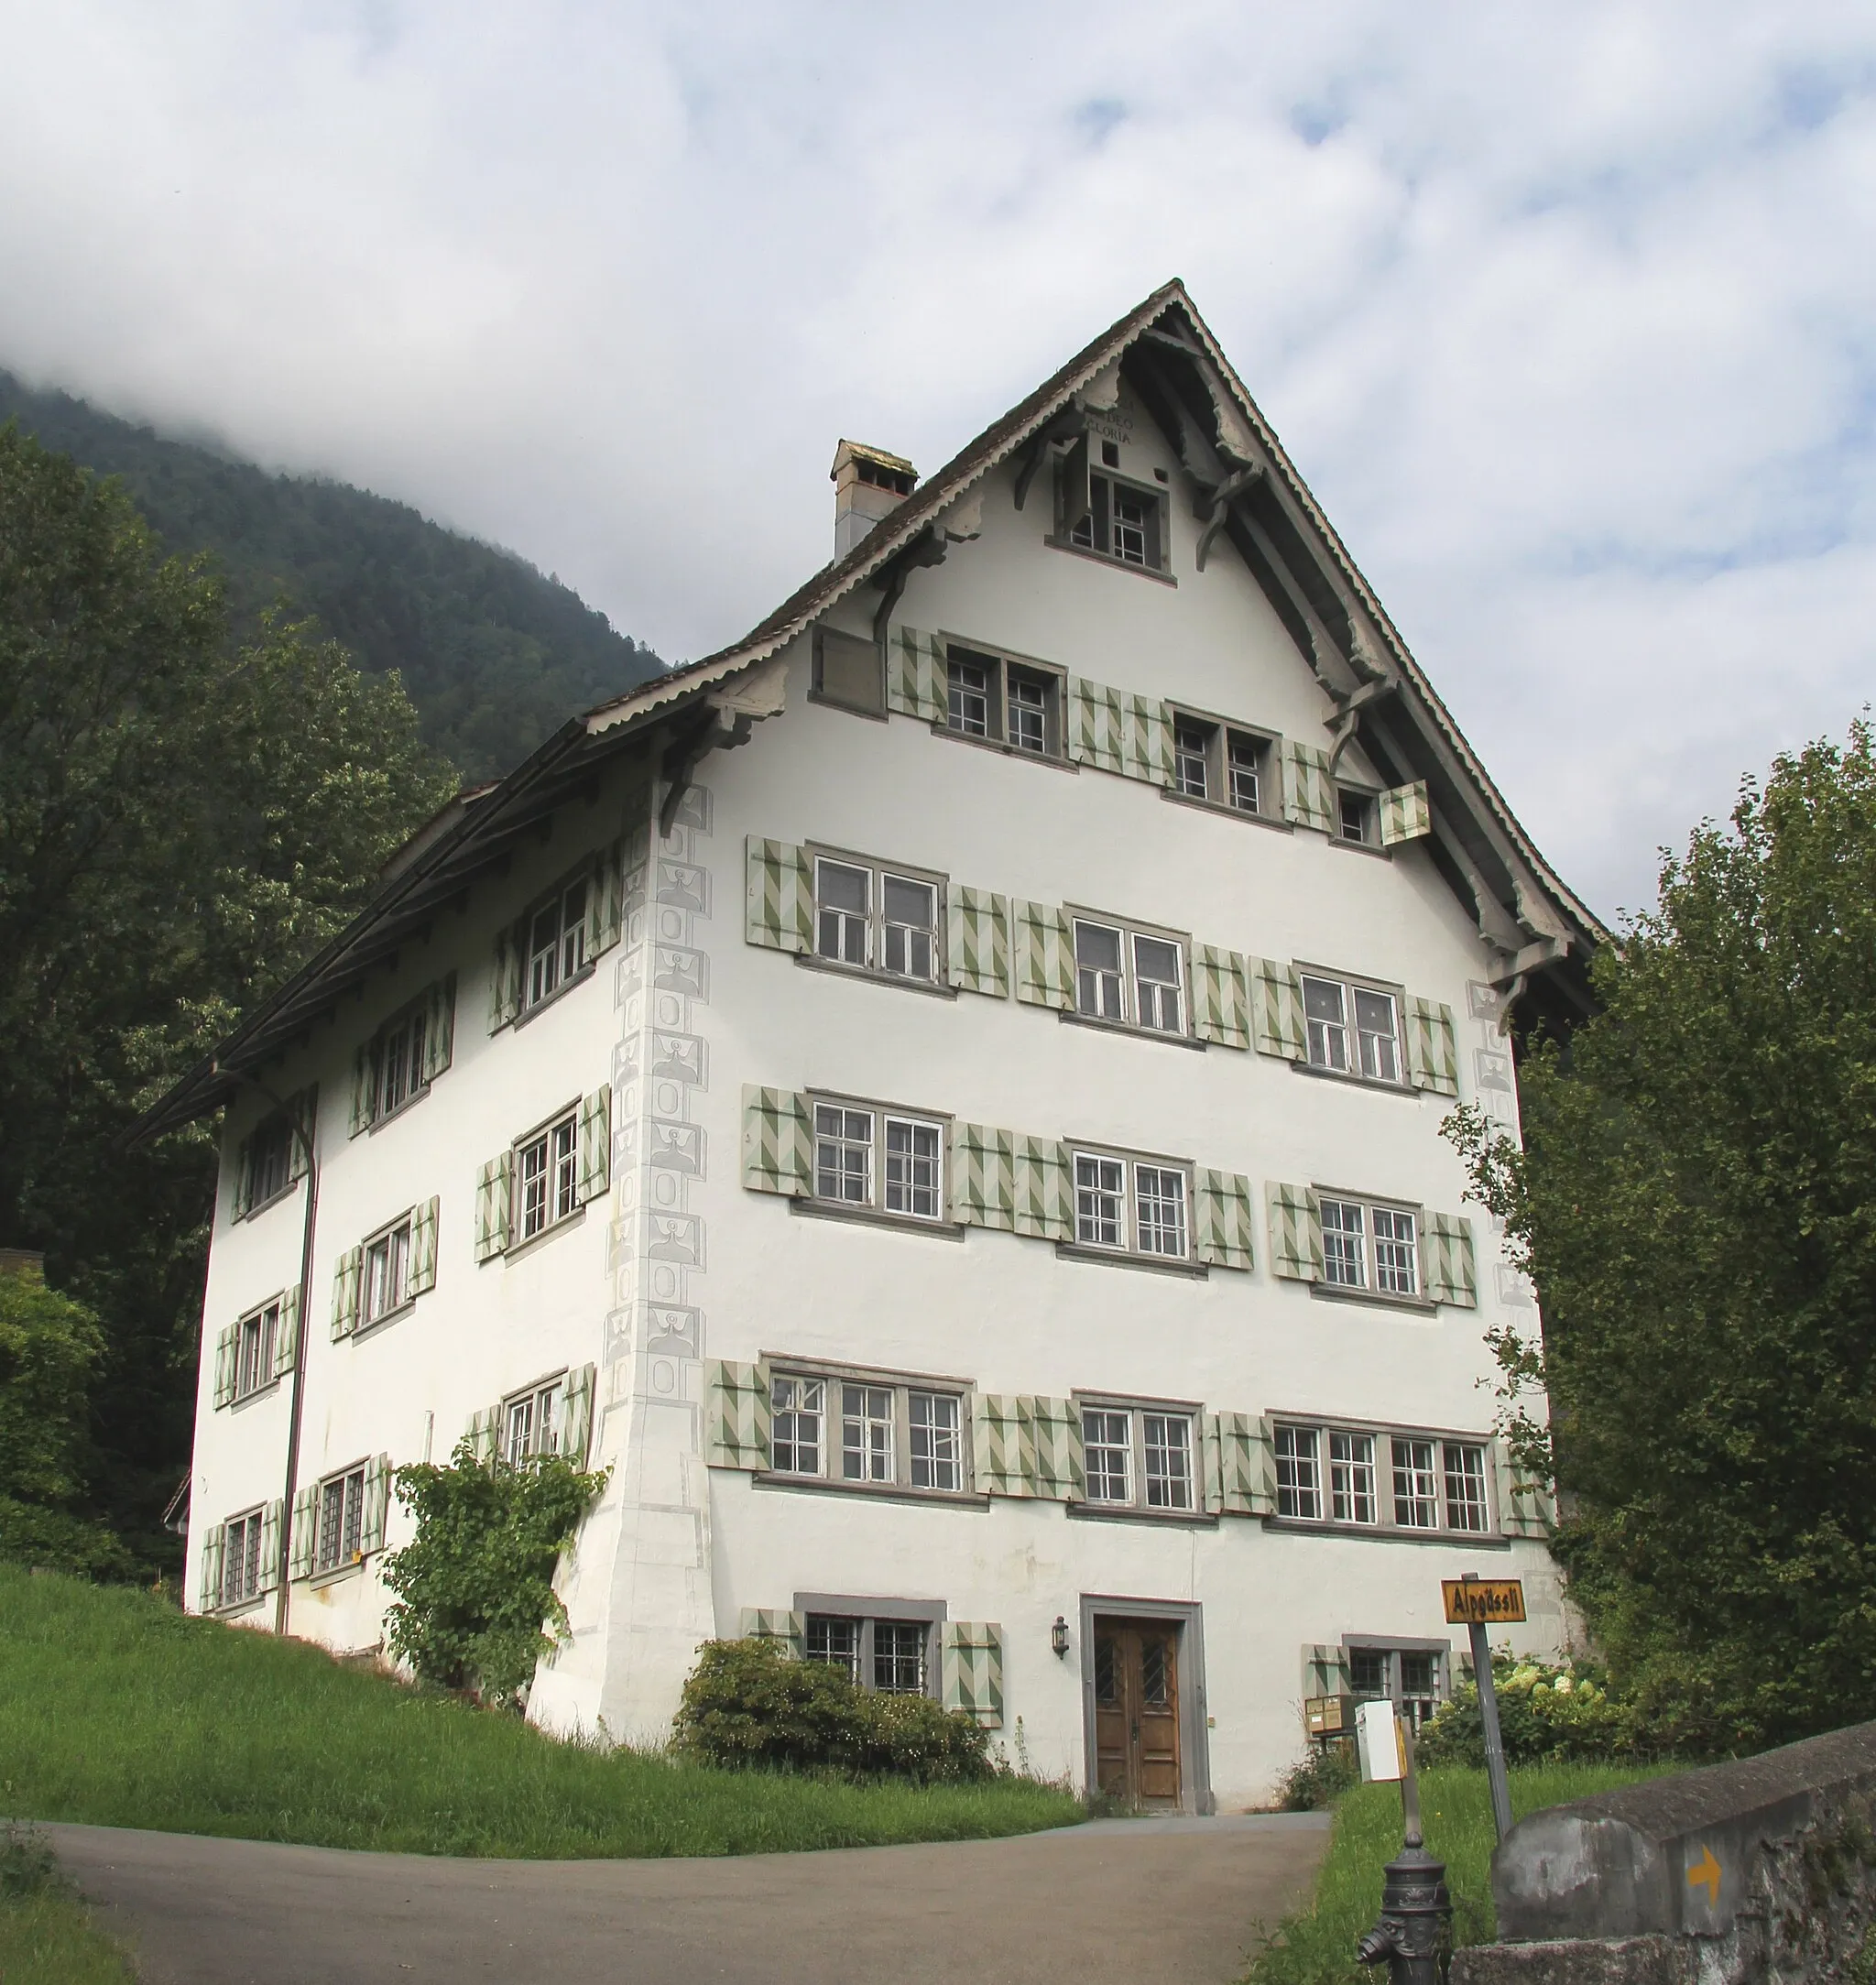 Photo showing: "Miltsches Ritterhaus", historic residential building in the community of en:Bilten, canton of Glarus, Switzerland